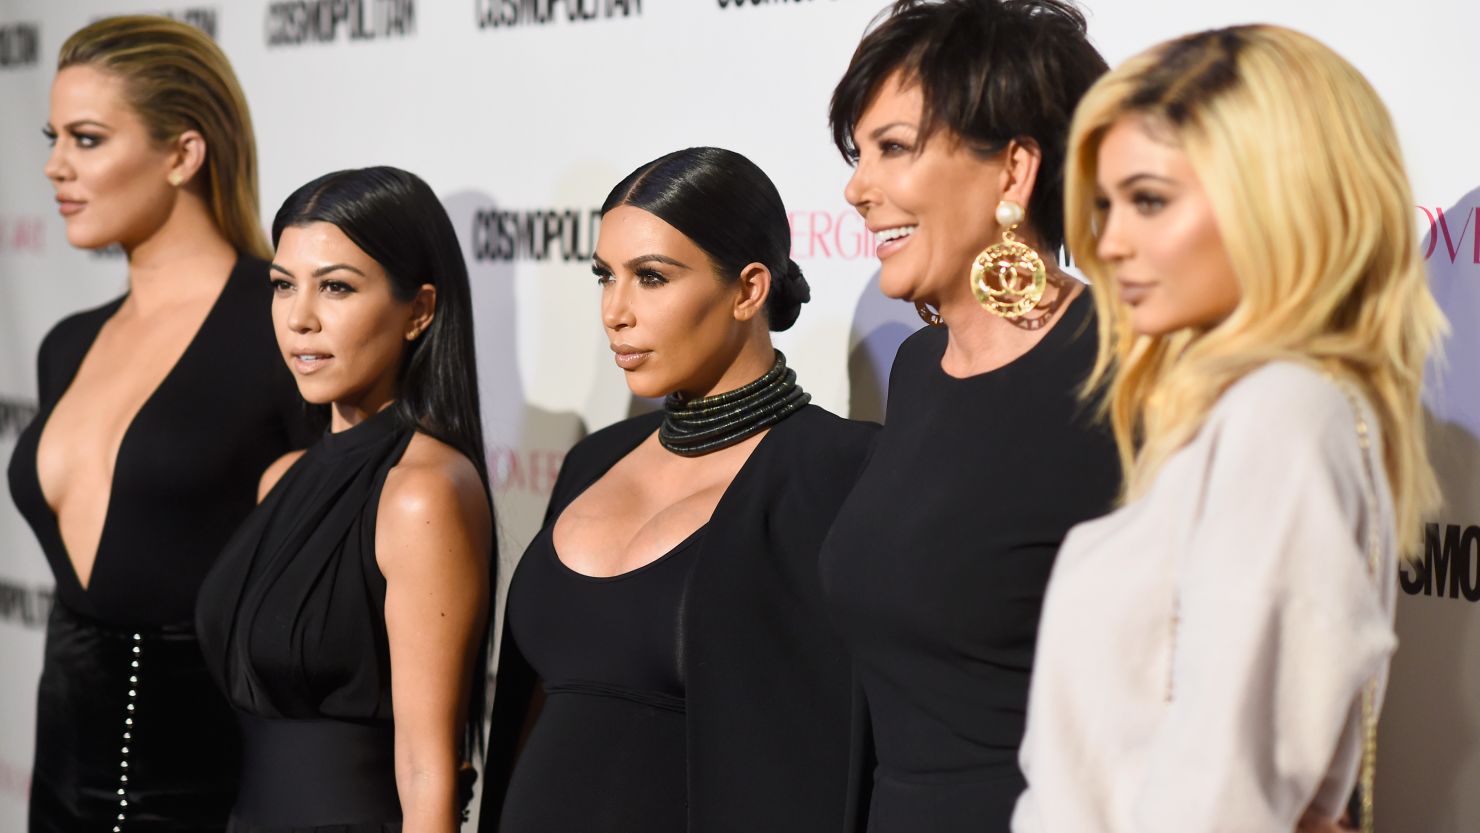 Khloe Kardashian, Kourtney Kardashian, Kim Kardashian West, Kris Jenner and Kylie Jenner, pictured here in October 2015 in West Hollywood, California. 